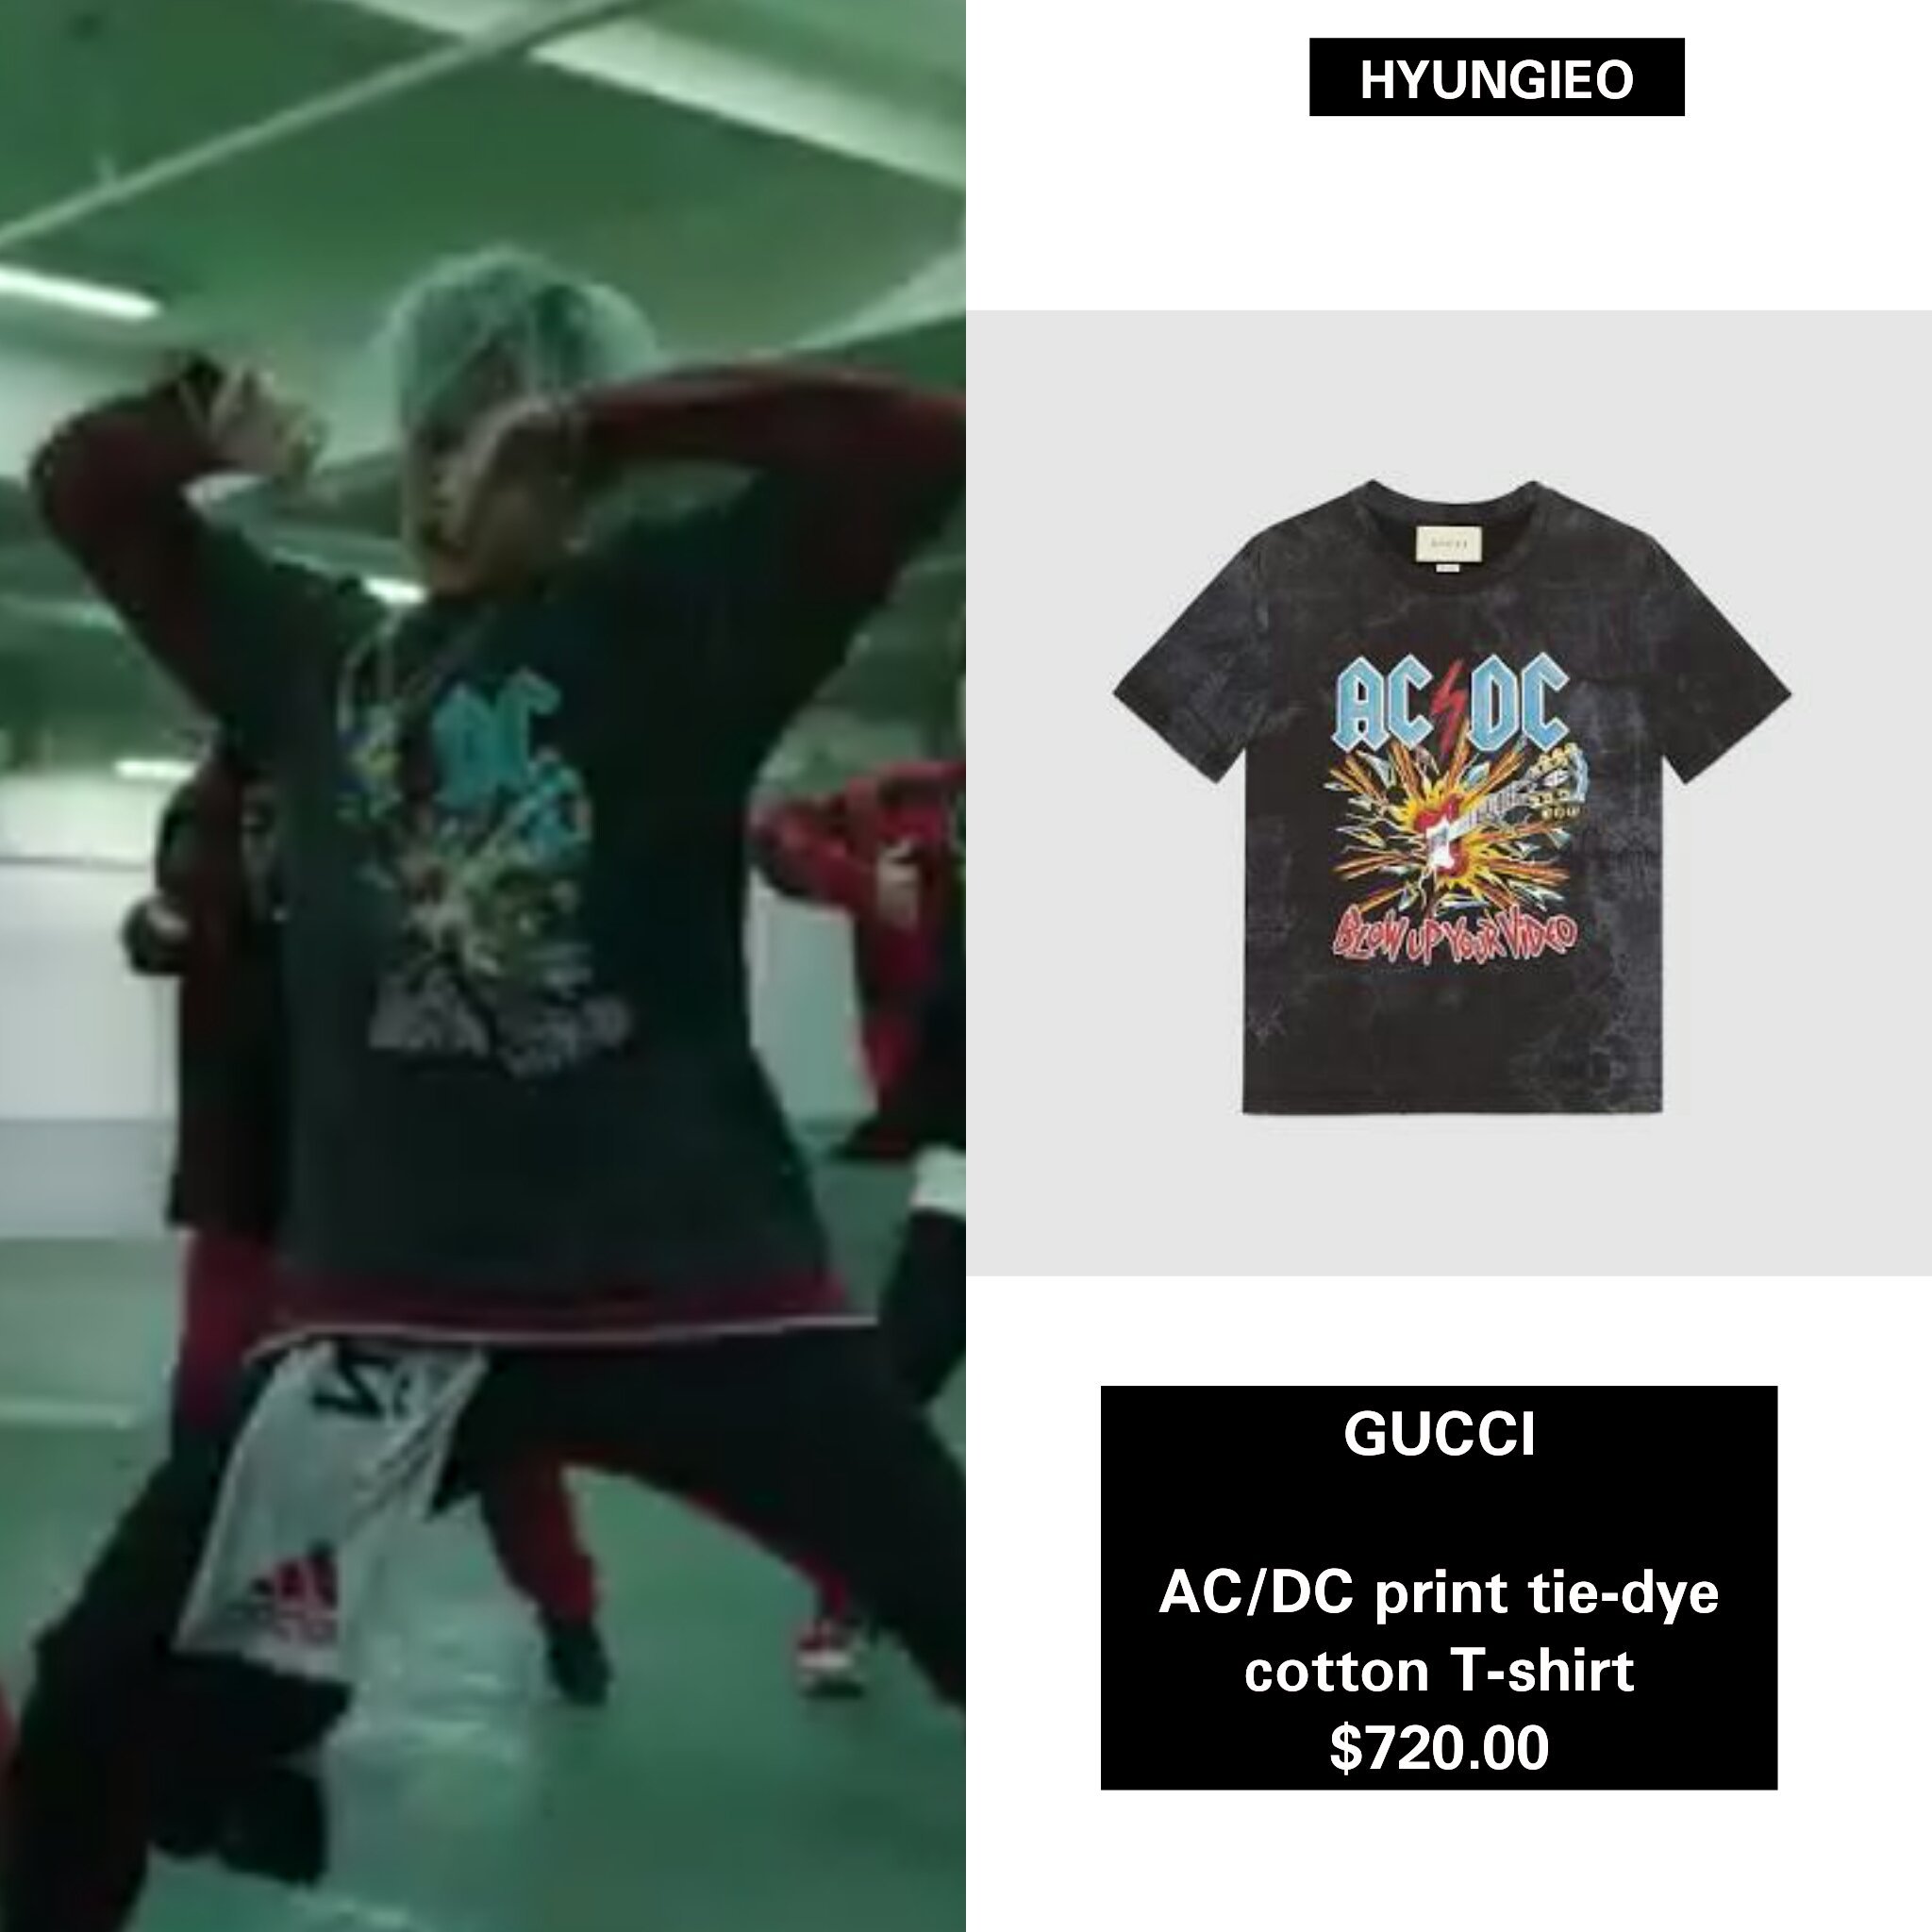 An on "NCT LIMITLESS JAPAN VERS MV #Taeyong GUCCI AC/DC print tie-dye cotton T-shirt $720.00 #태용 #NCT127 #LIMITLESS https://t.co/yerYvGbLC1" /